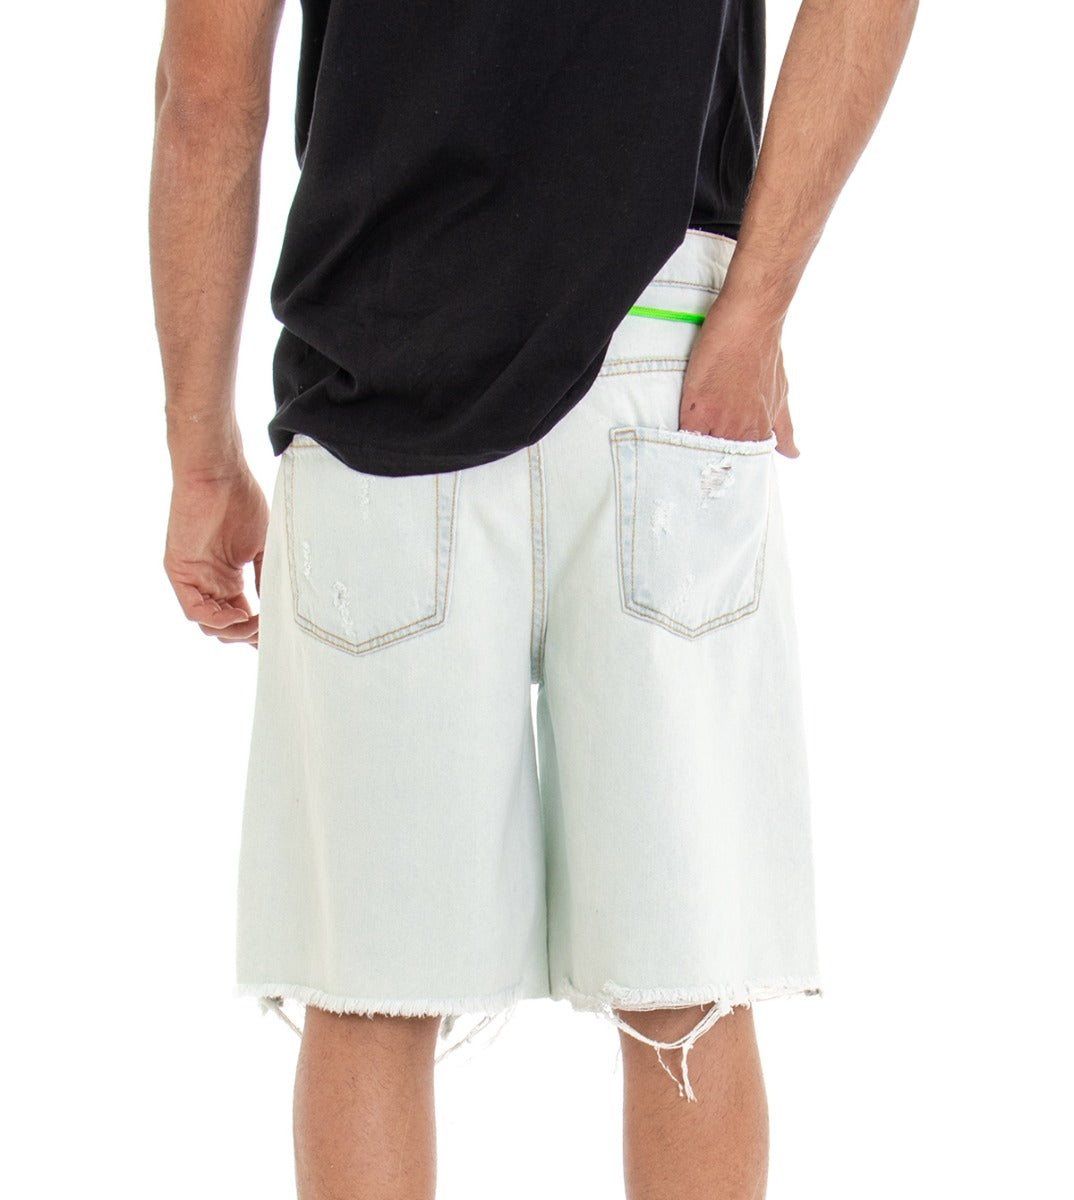 Bermuda Pantaloncino Uomo Pantaloncino Corto Shorts Denim Chiaro Rotture Macchie Pittura Over GIOSAL-PC1518A